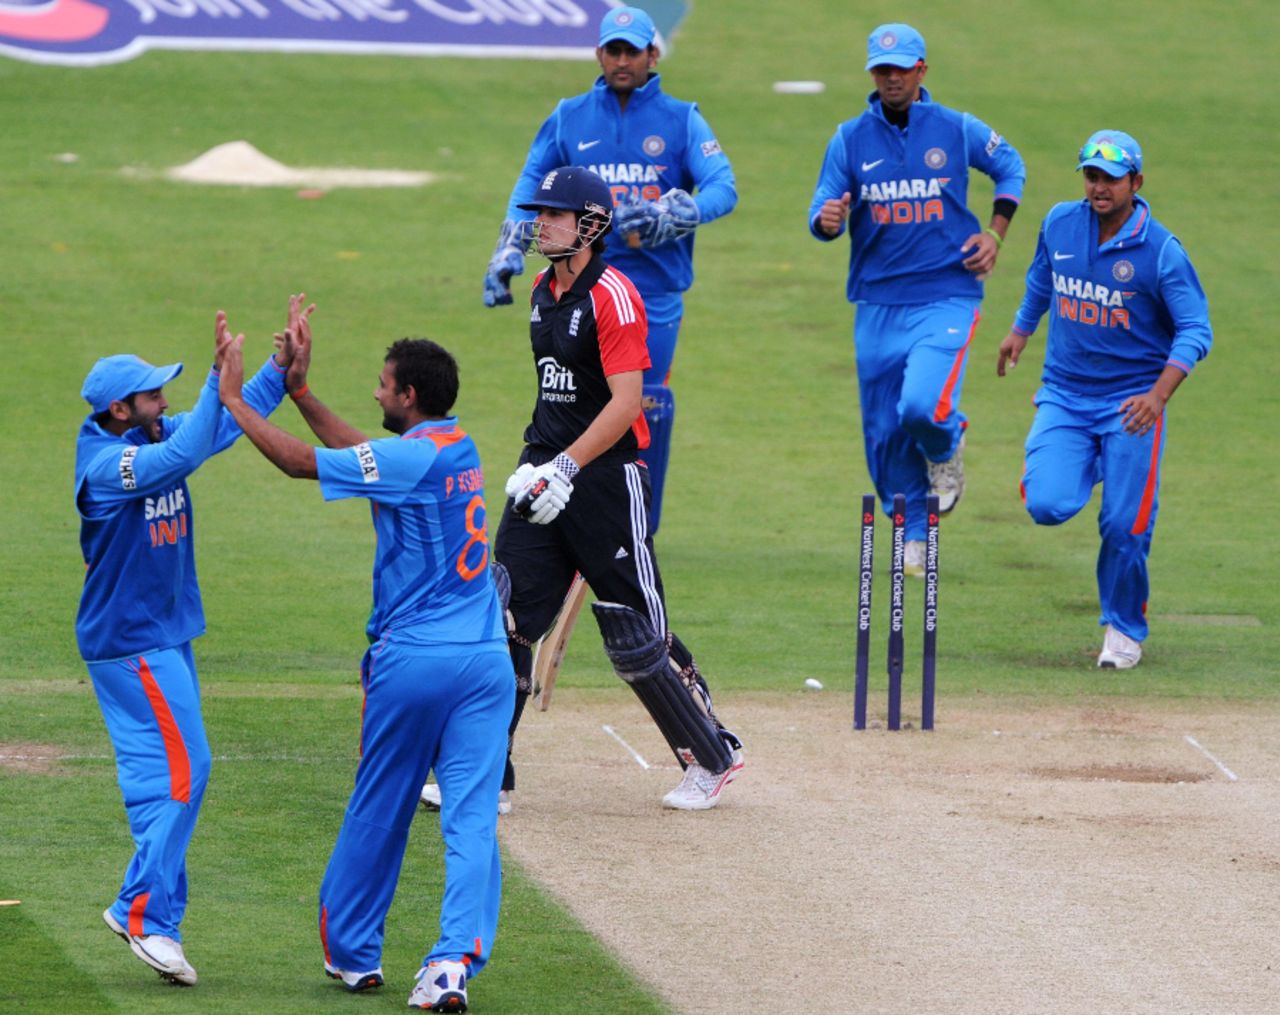 Praveen Kumar struck with the new ball for India, England v India, 1st ODI, Chester-le-Street, September 3, 2011